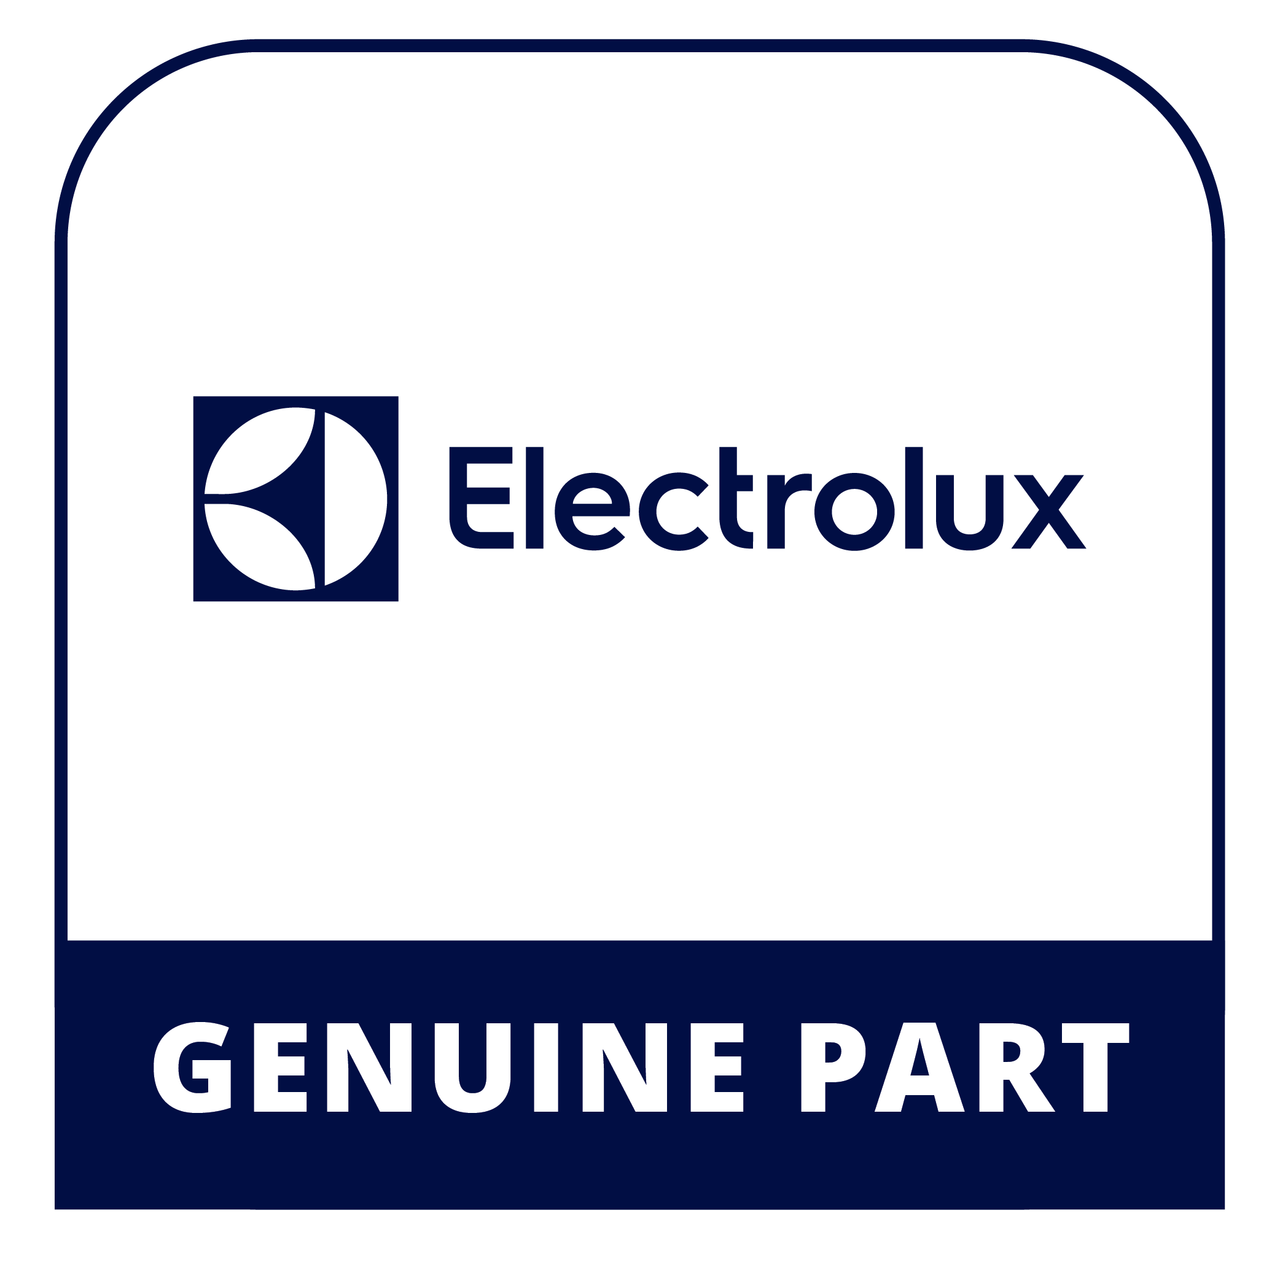 Frigidaire - Electrolux 5303935299 Panel - Genuine Electrolux Part